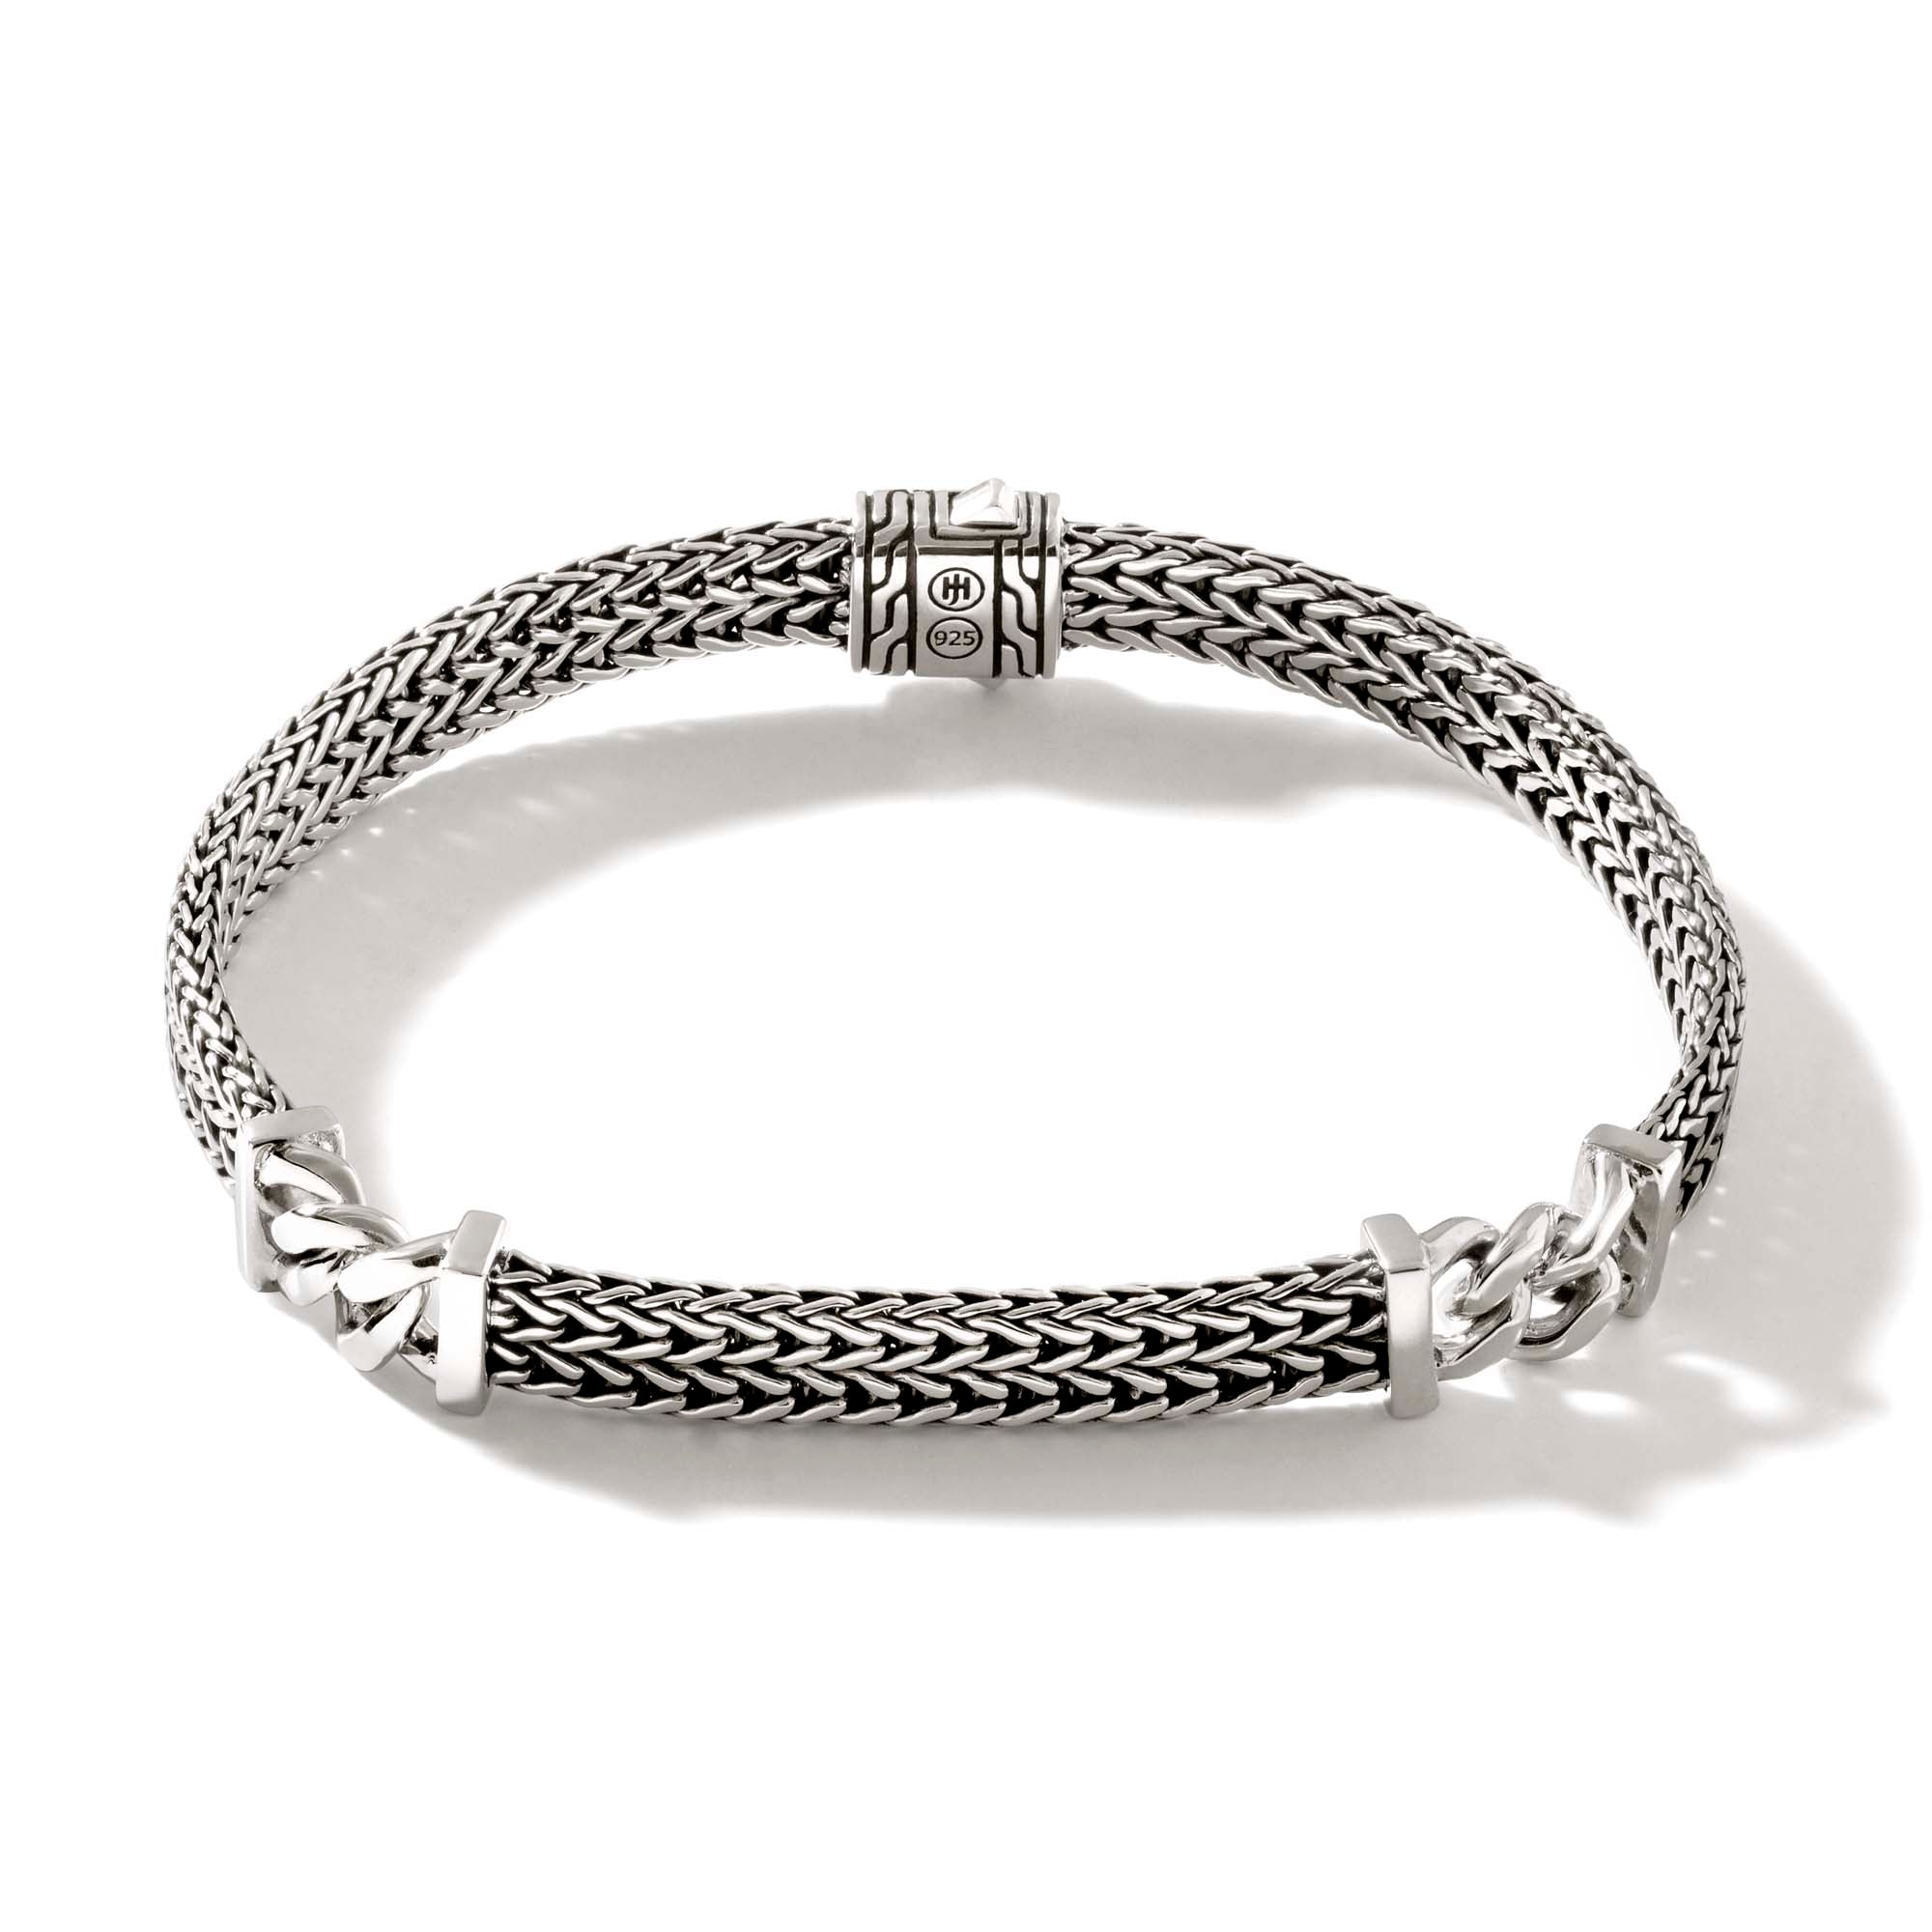 Rata Chain Bracelet, Sterling Silver, 6MM|BU900948 – John Hardy